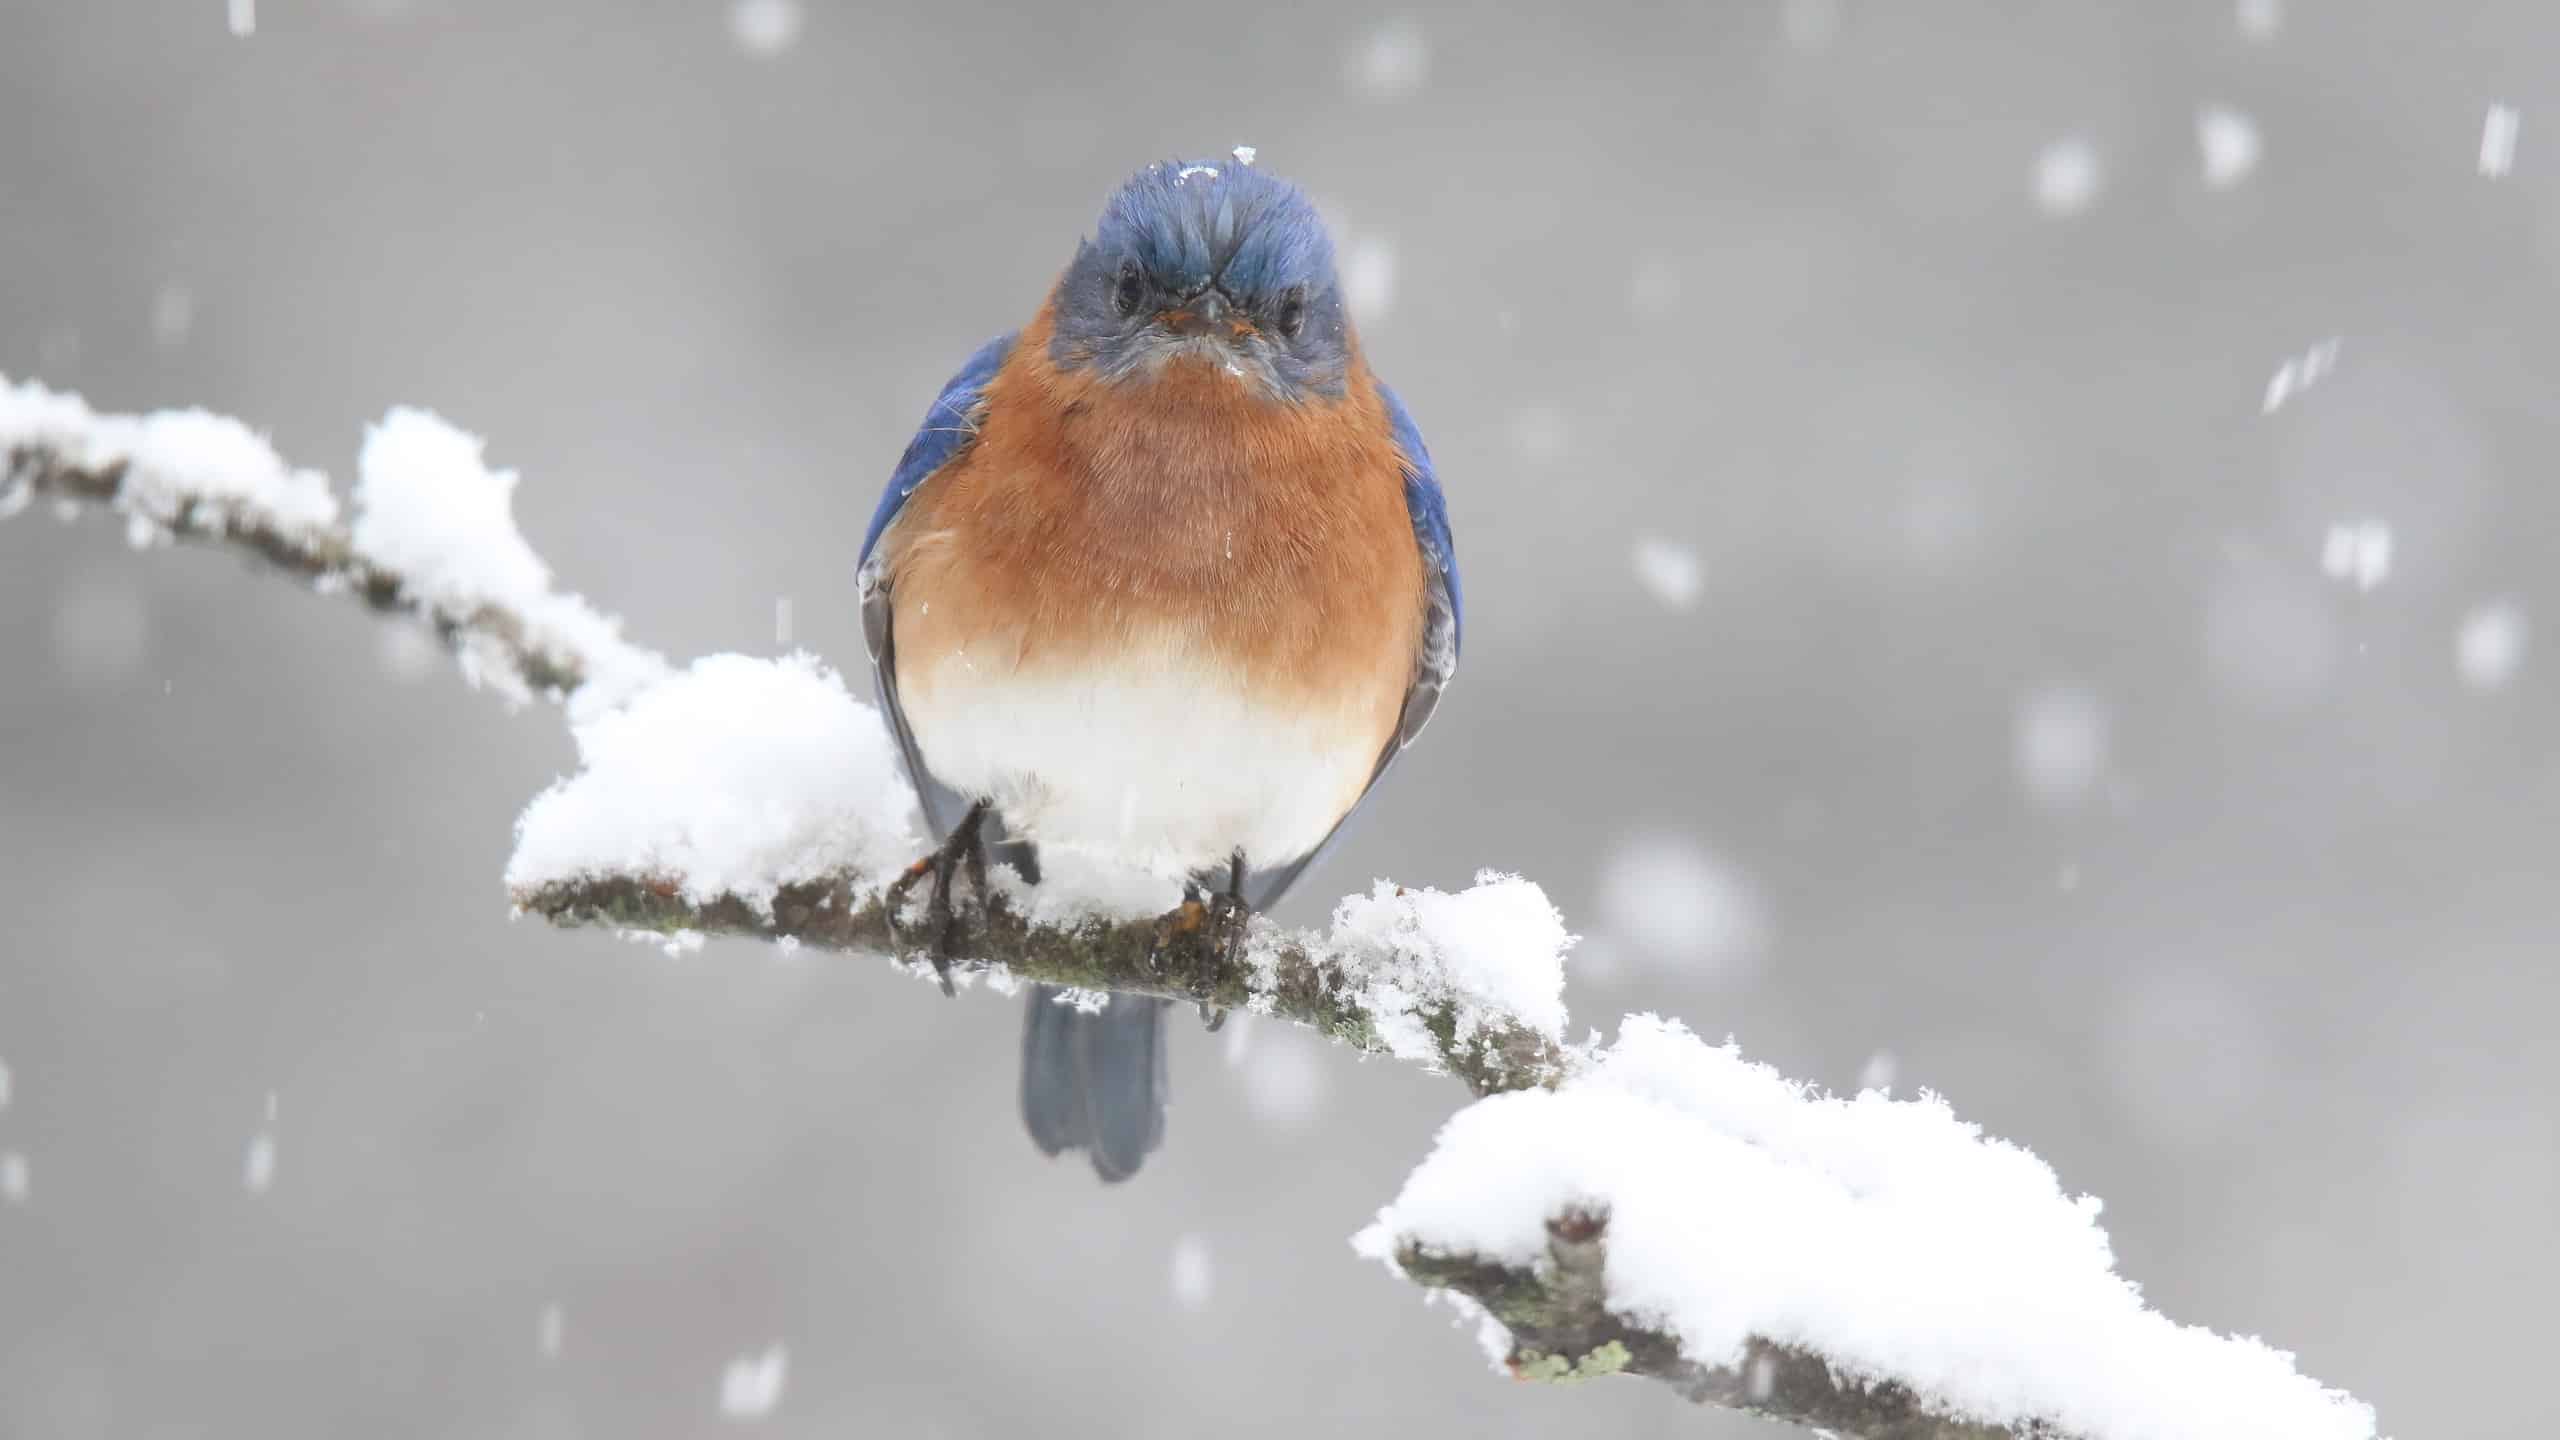 Male Eastern Bluebird perching on a snowy branch in a winter snow storm